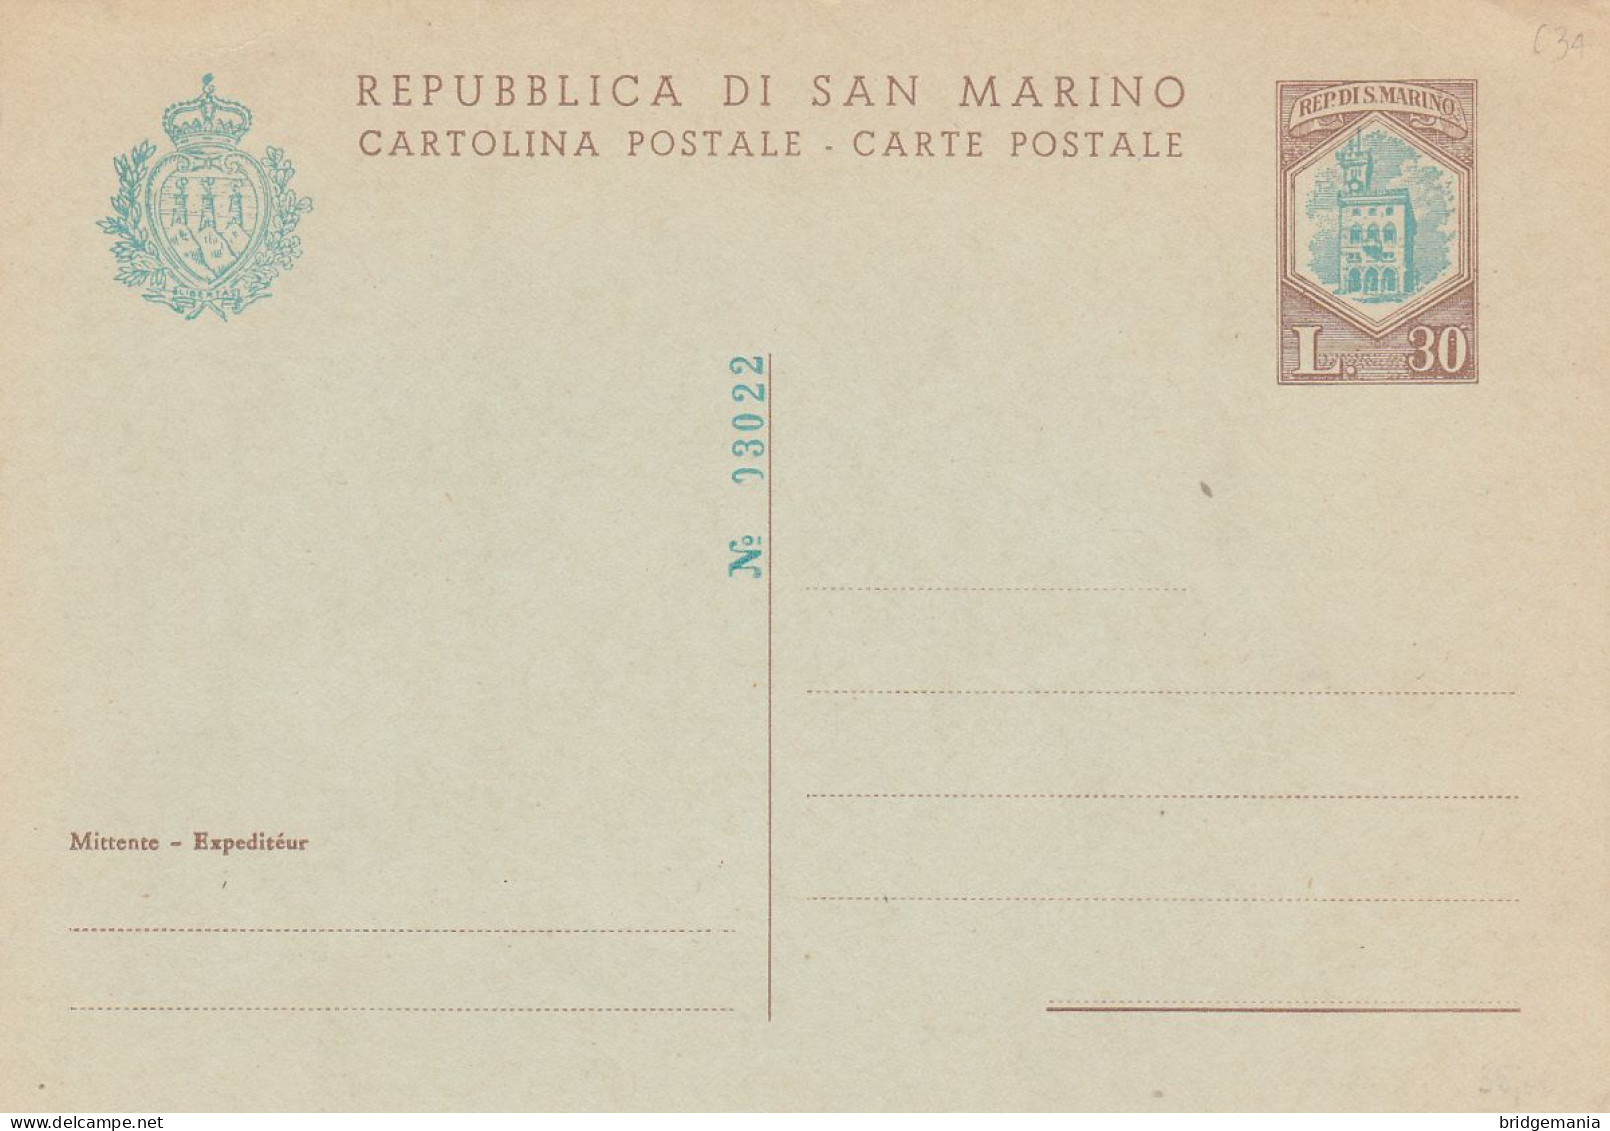 IPC001 - 1966 INTERI POSTALI SAN MARINO C34 L.30 CARTOLINA POSTALE NUOVA OTTIMA - Enteros Postales